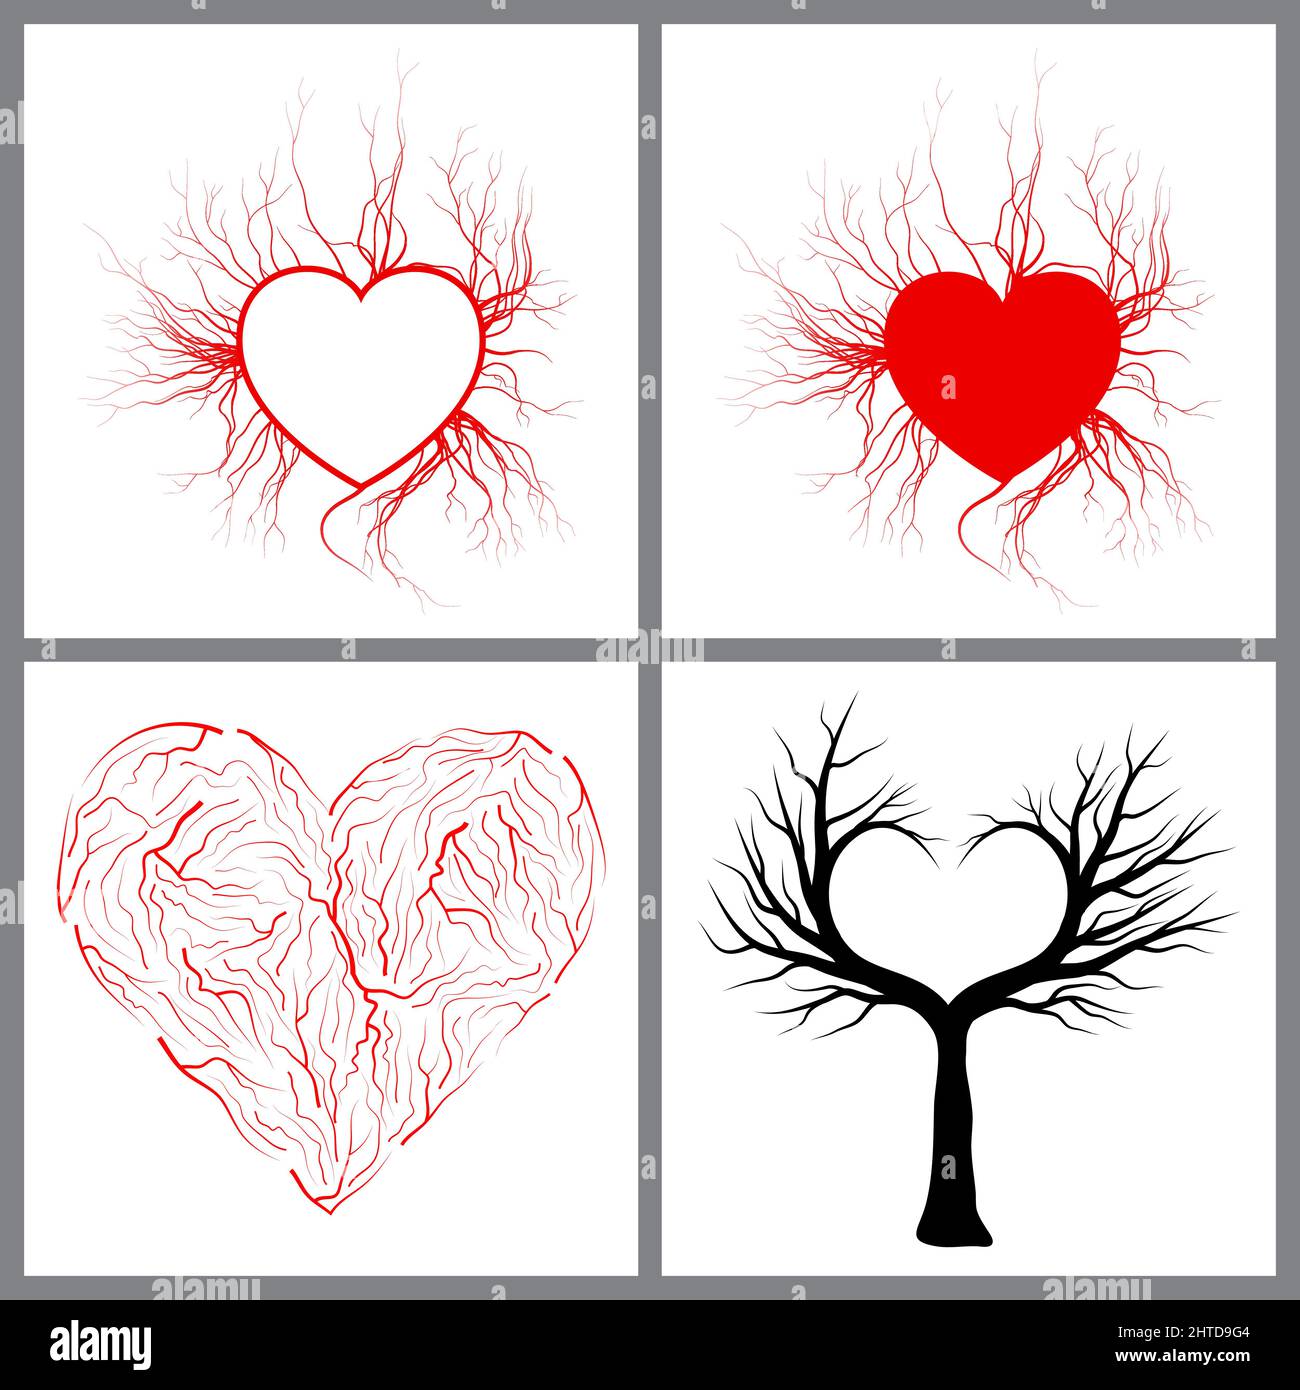 vein heart shape vector set illustration isolated on white background Stock Vector